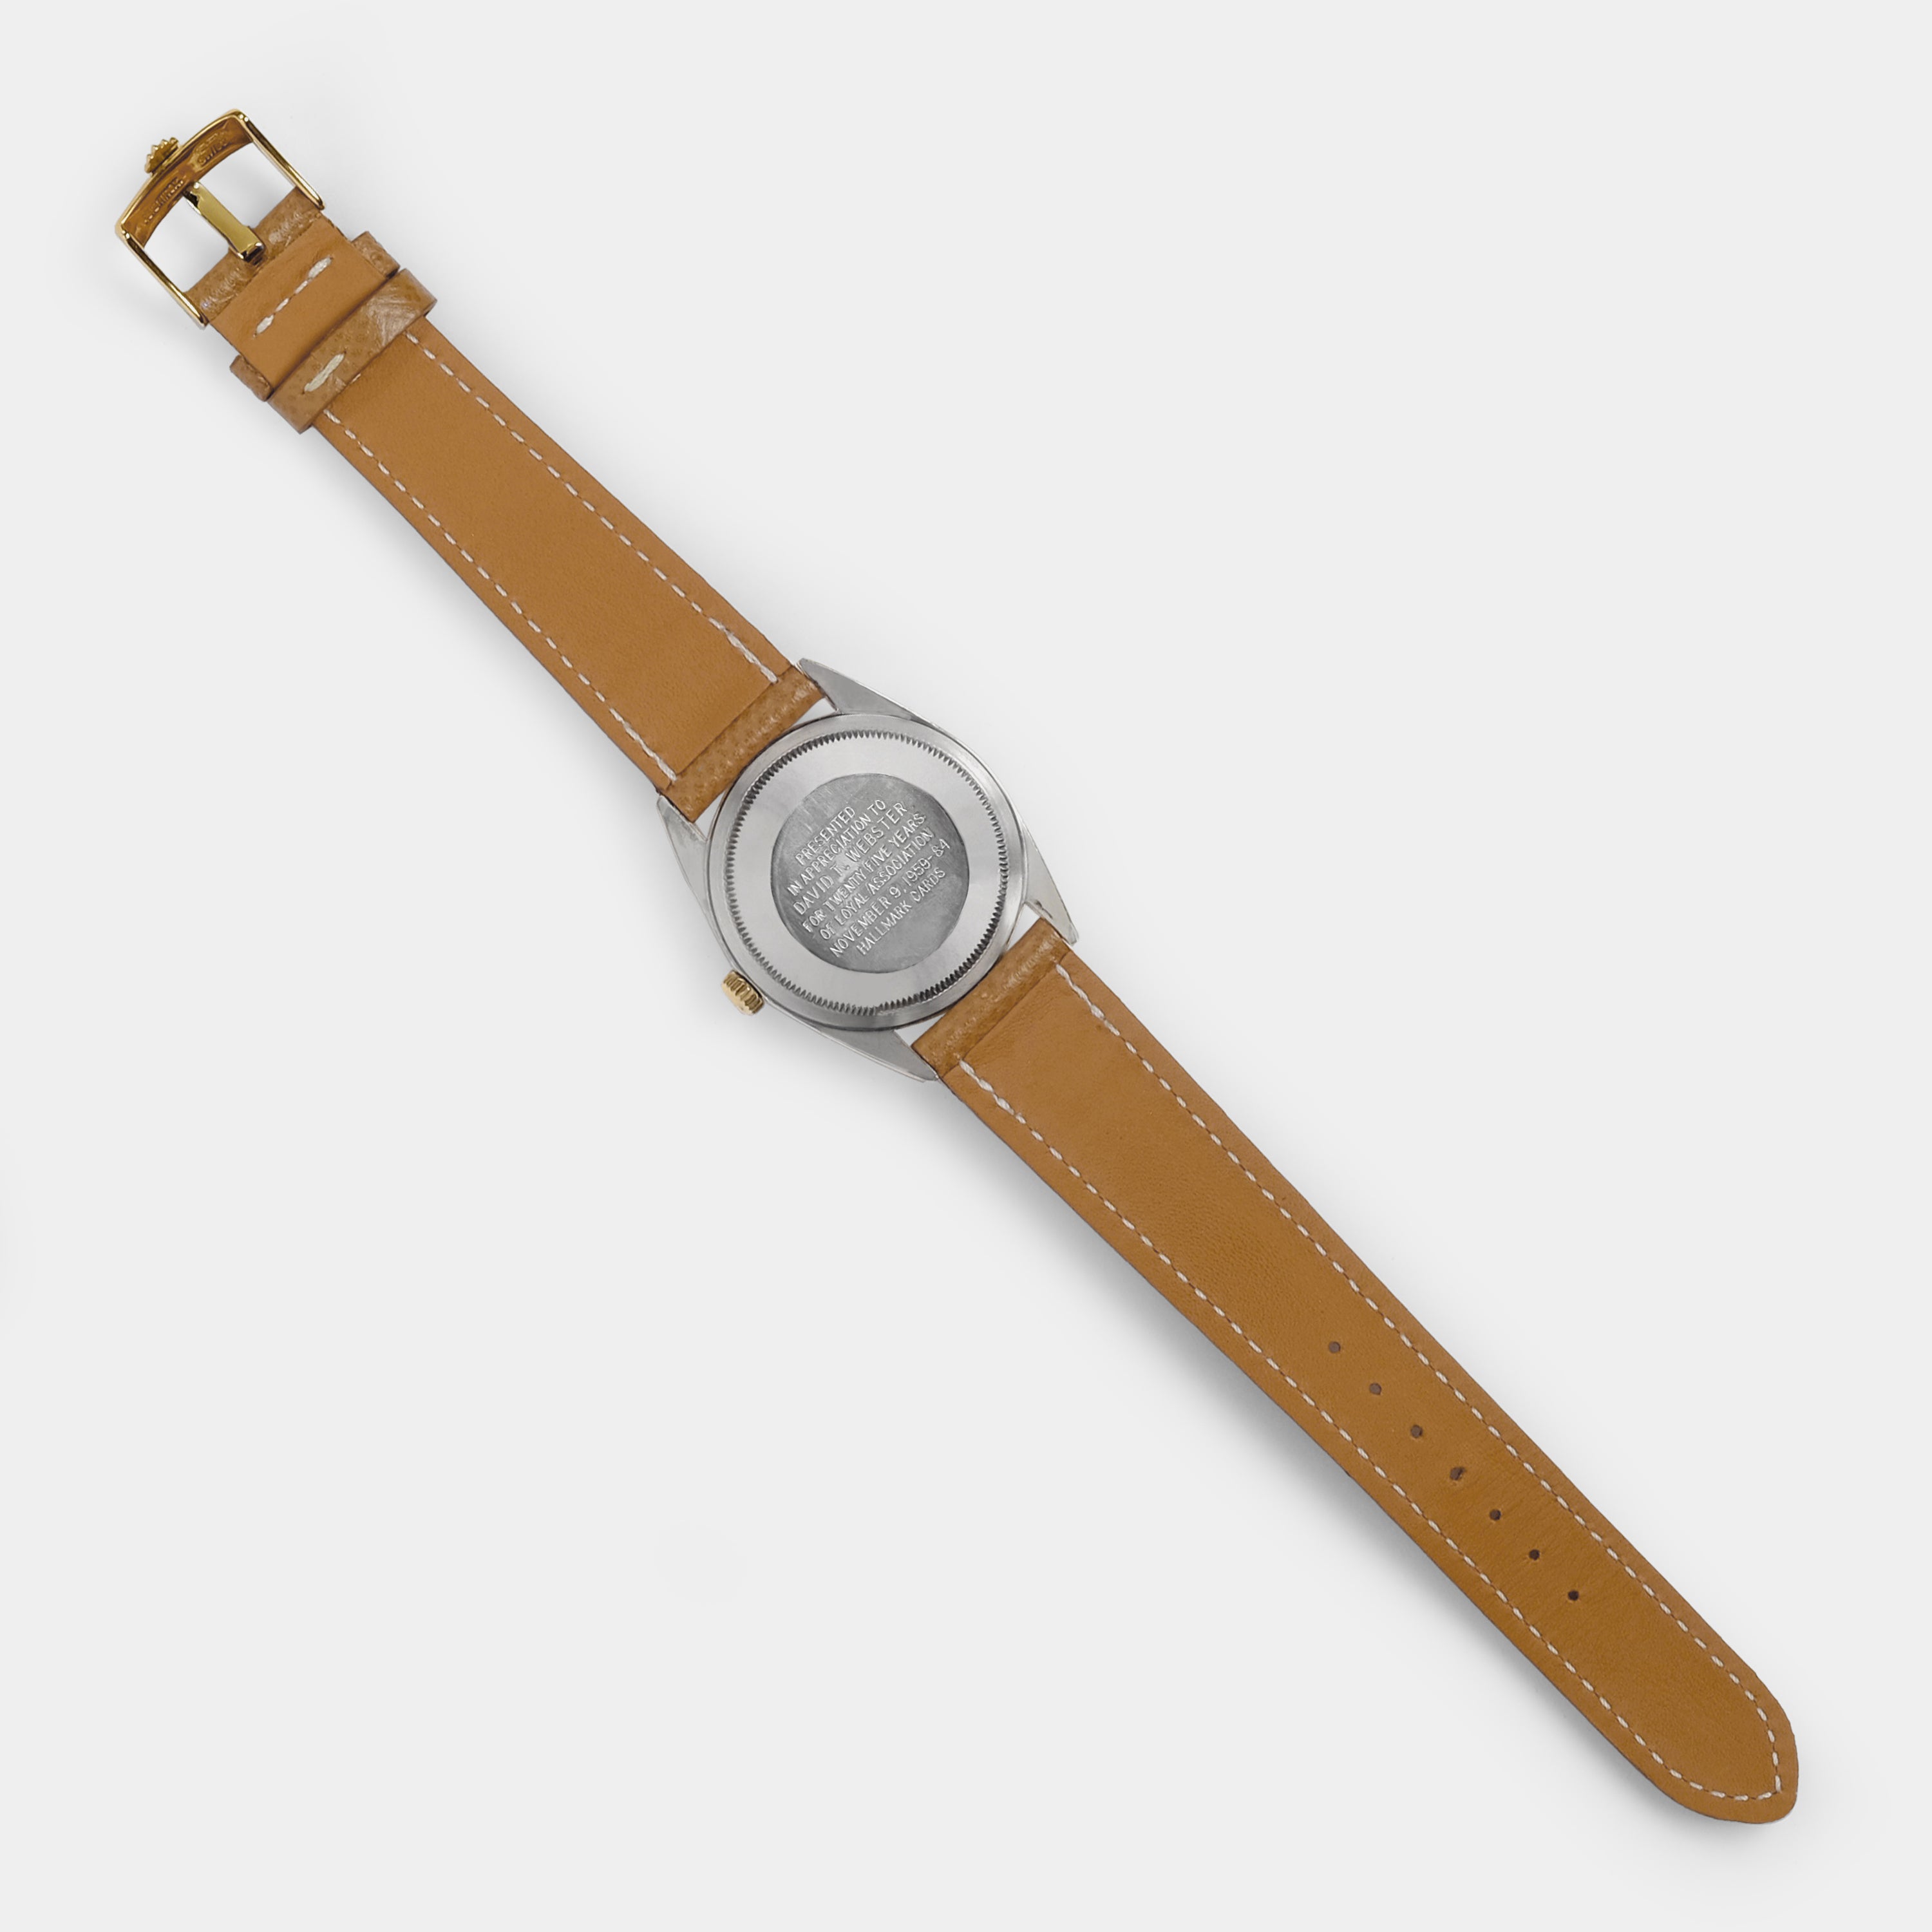 Rolex Oyster Perpetual "Hallmark" ref. 1024 Circa 1984 Wristwatch